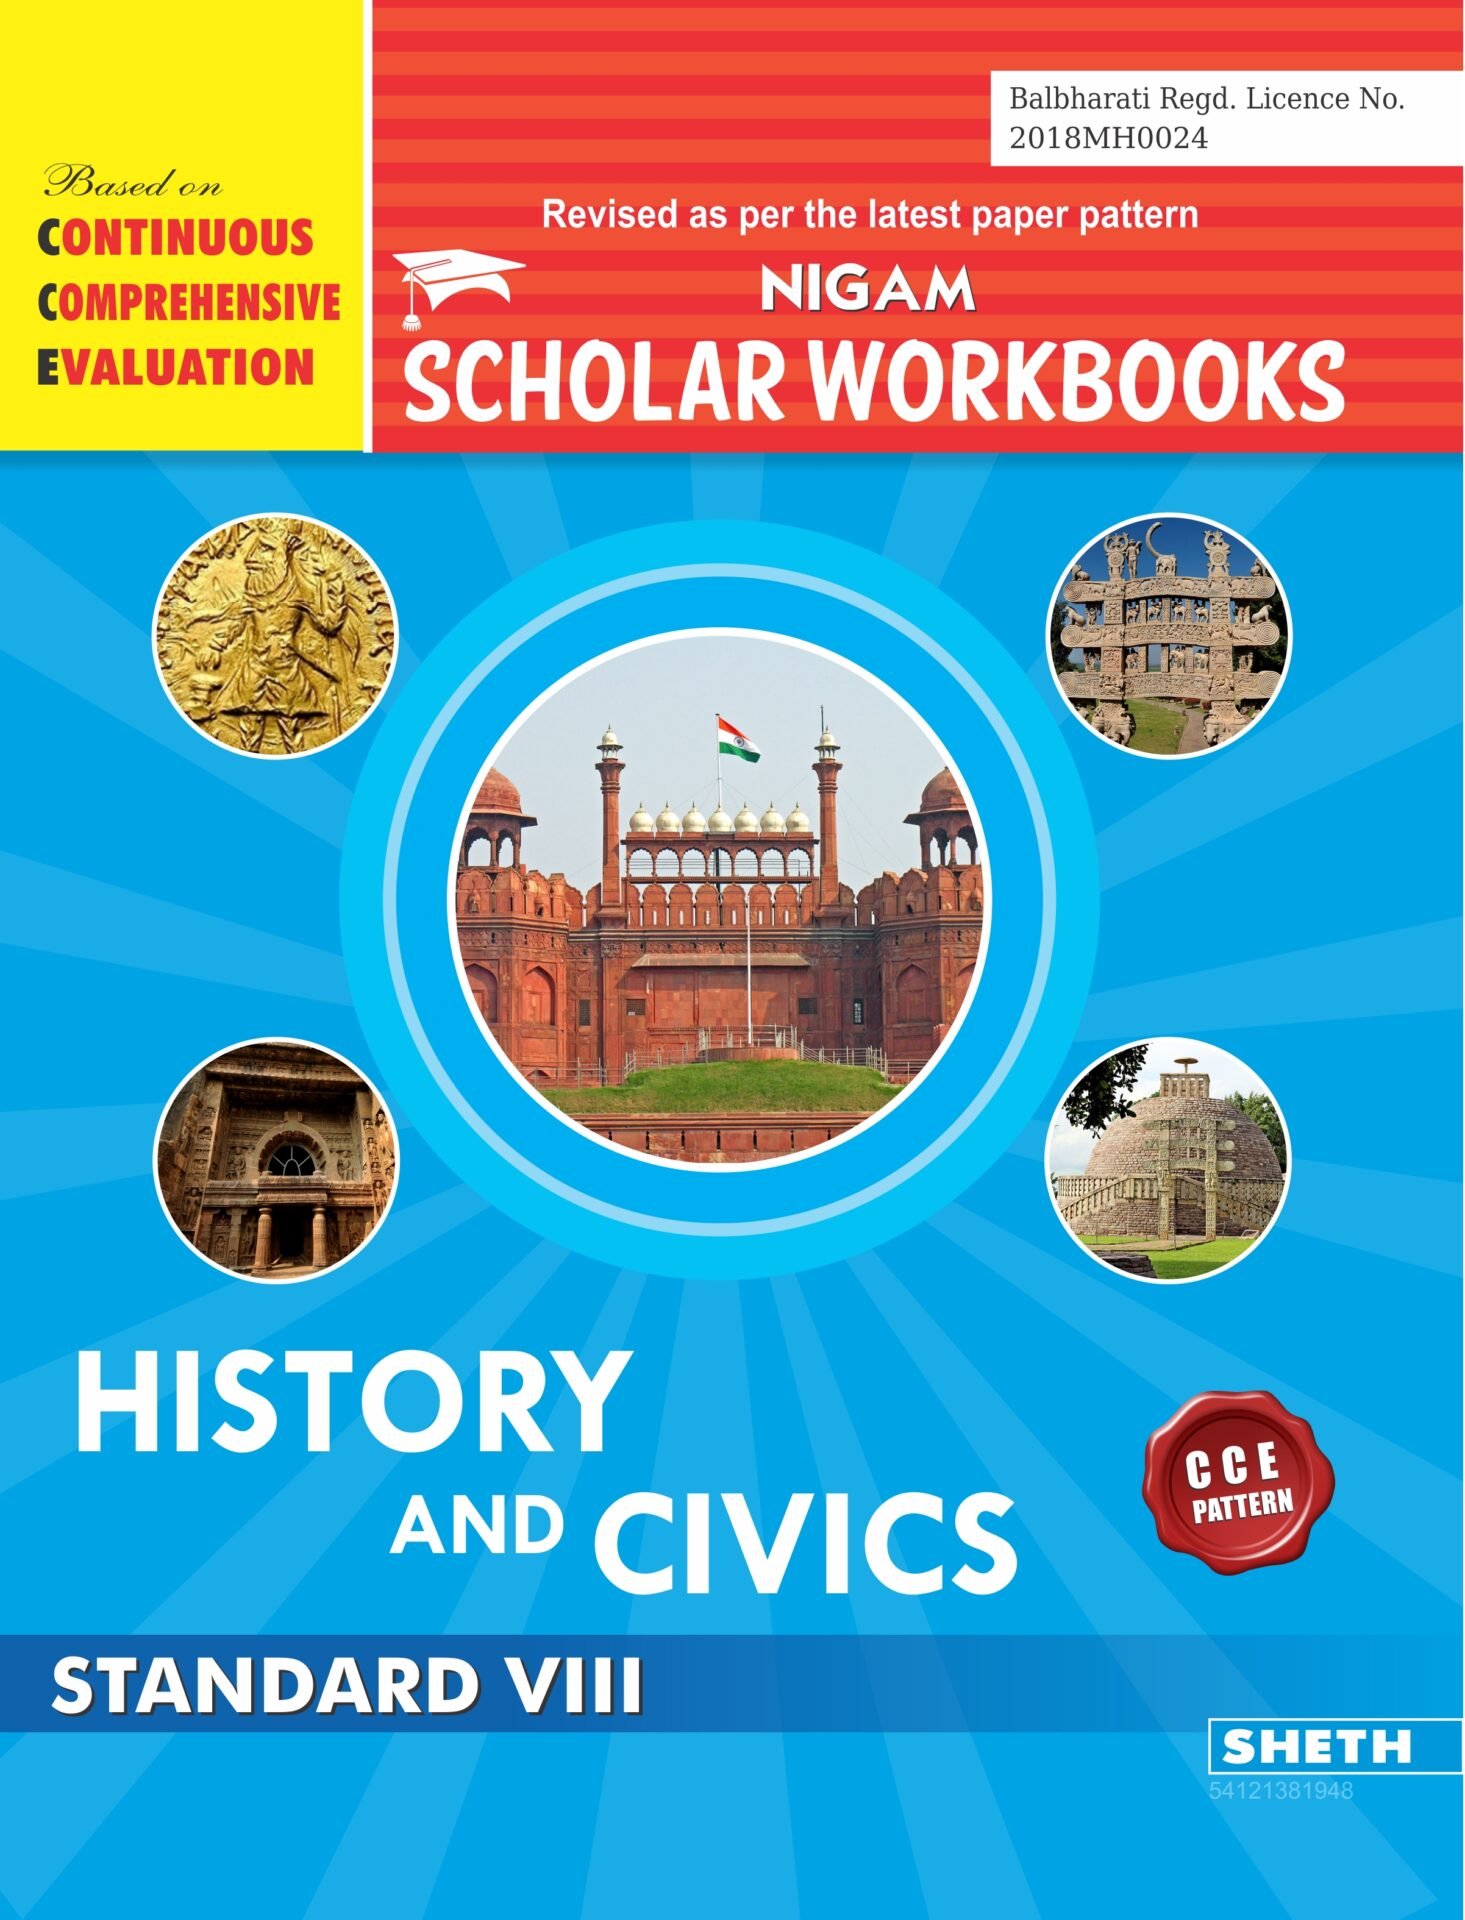 CCE Pattern Nigam Scholar Workbooks History and Civics Standard 8 1